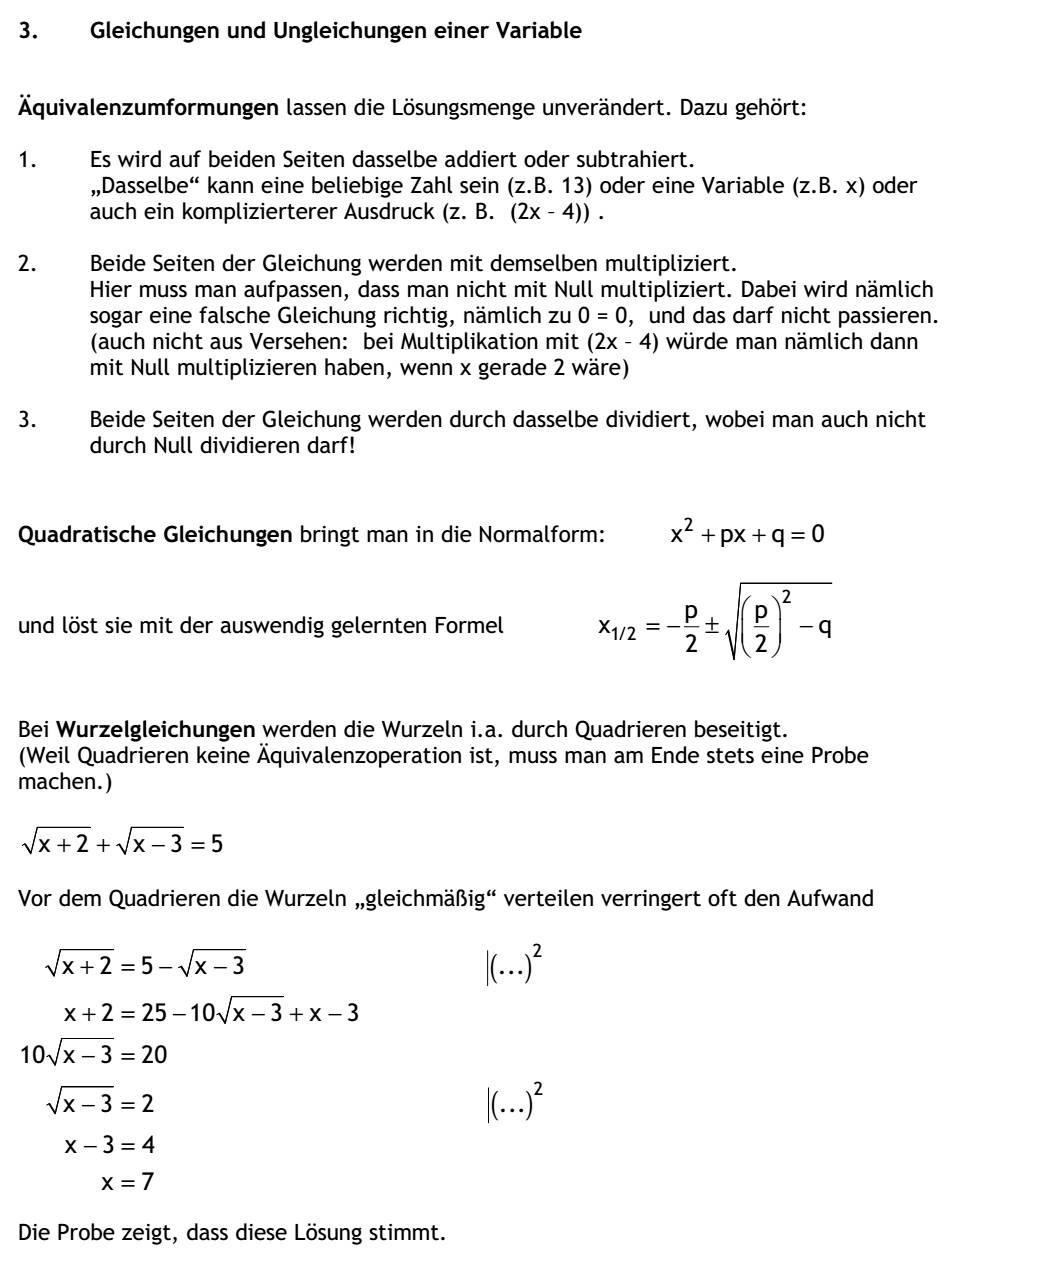  (image: https://hssm.hqedv.de/uploads/TutoriumMatheGKGleichungen/MatheGKGleichungen.jpg) 